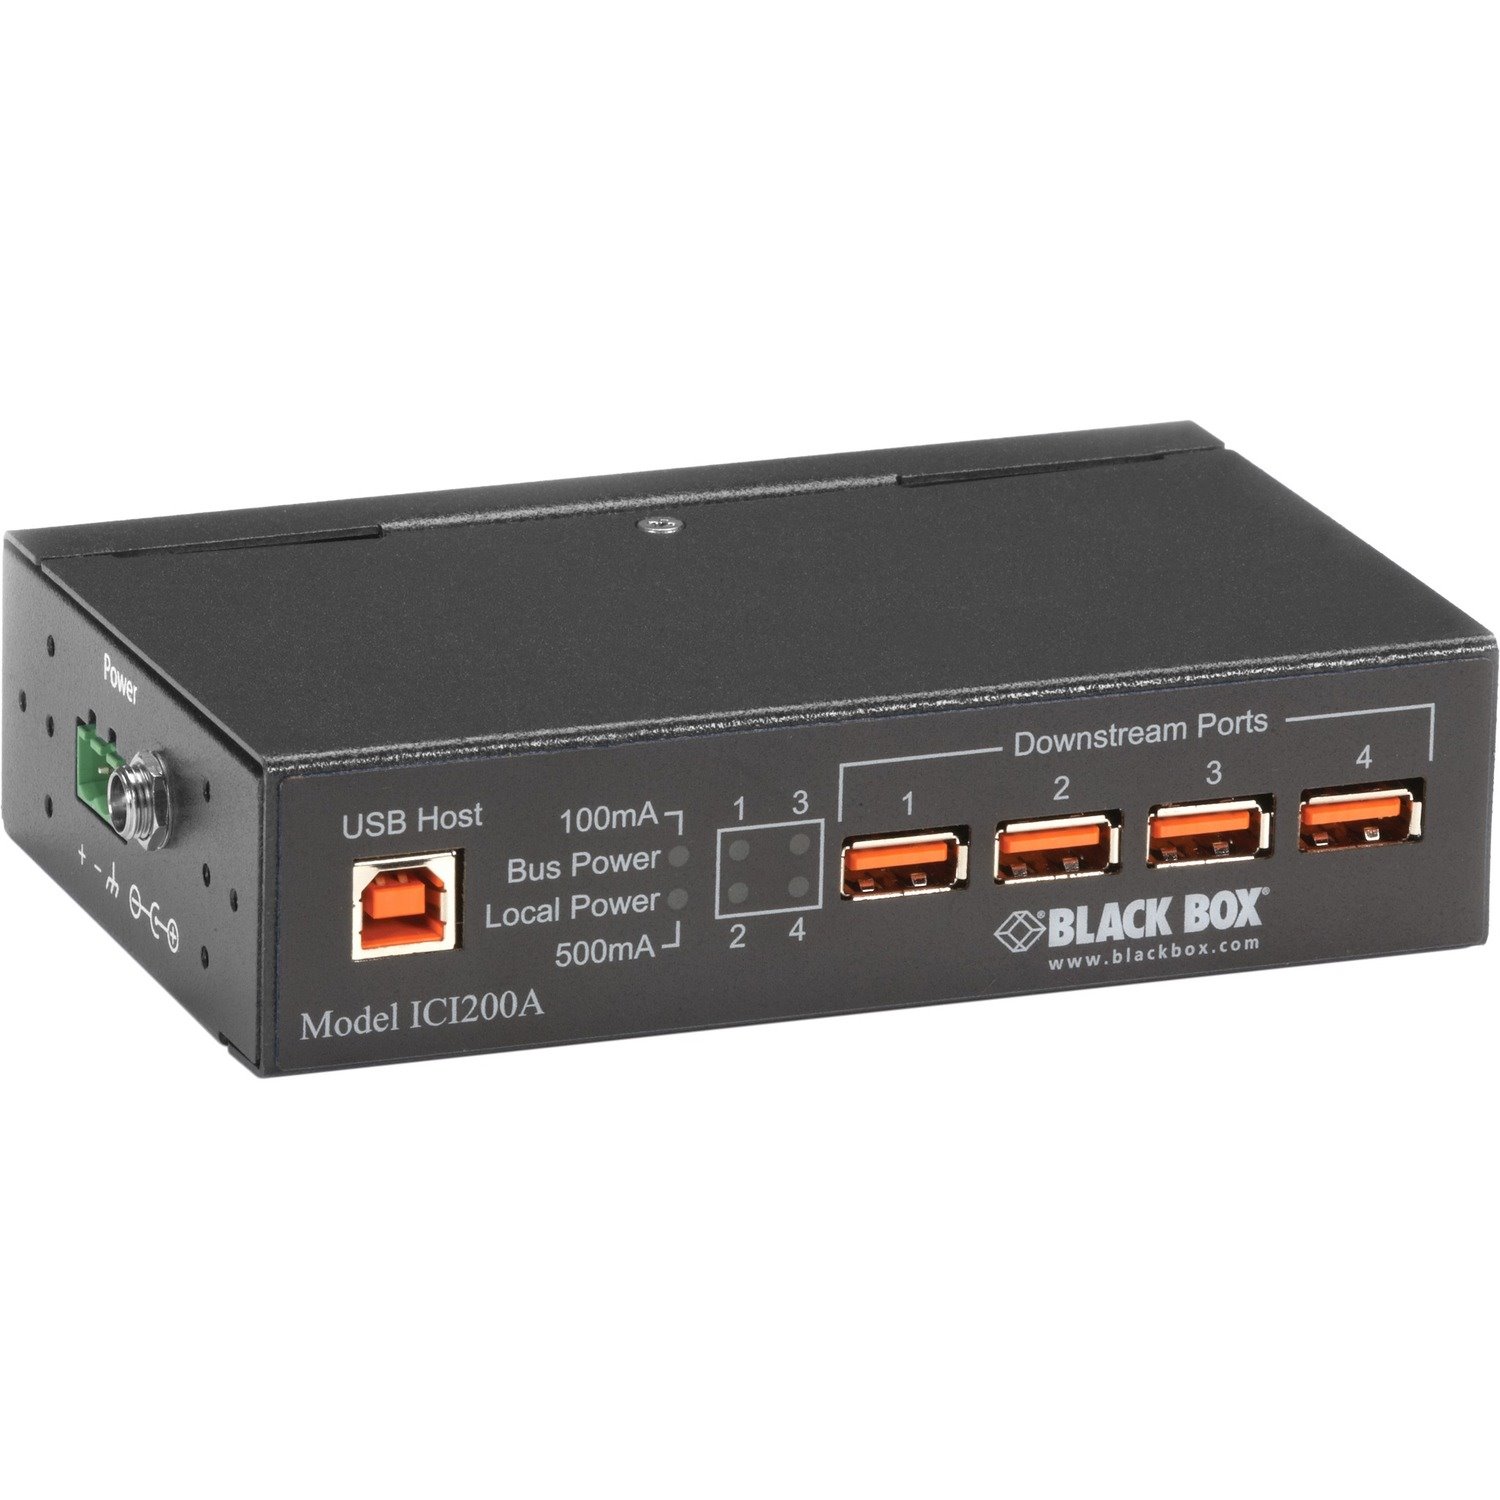 Black Box Industrial USB 2.0 Hub - 4-Port